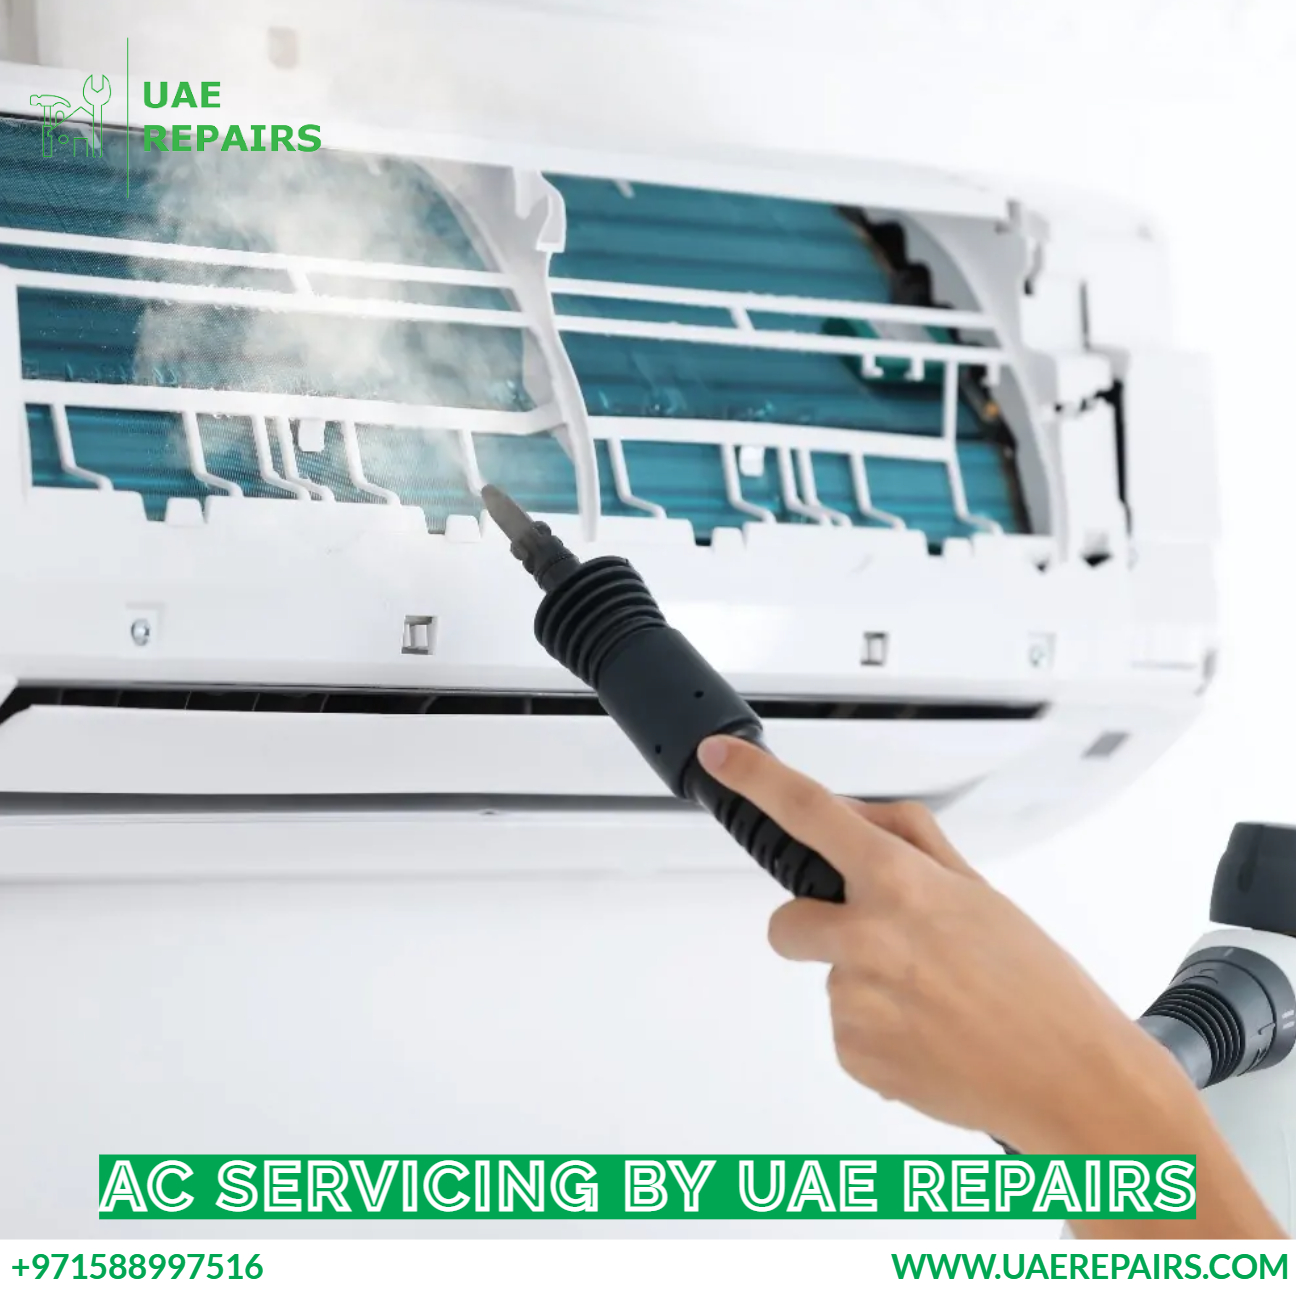 Ac Servicing by UAE REPAIRS